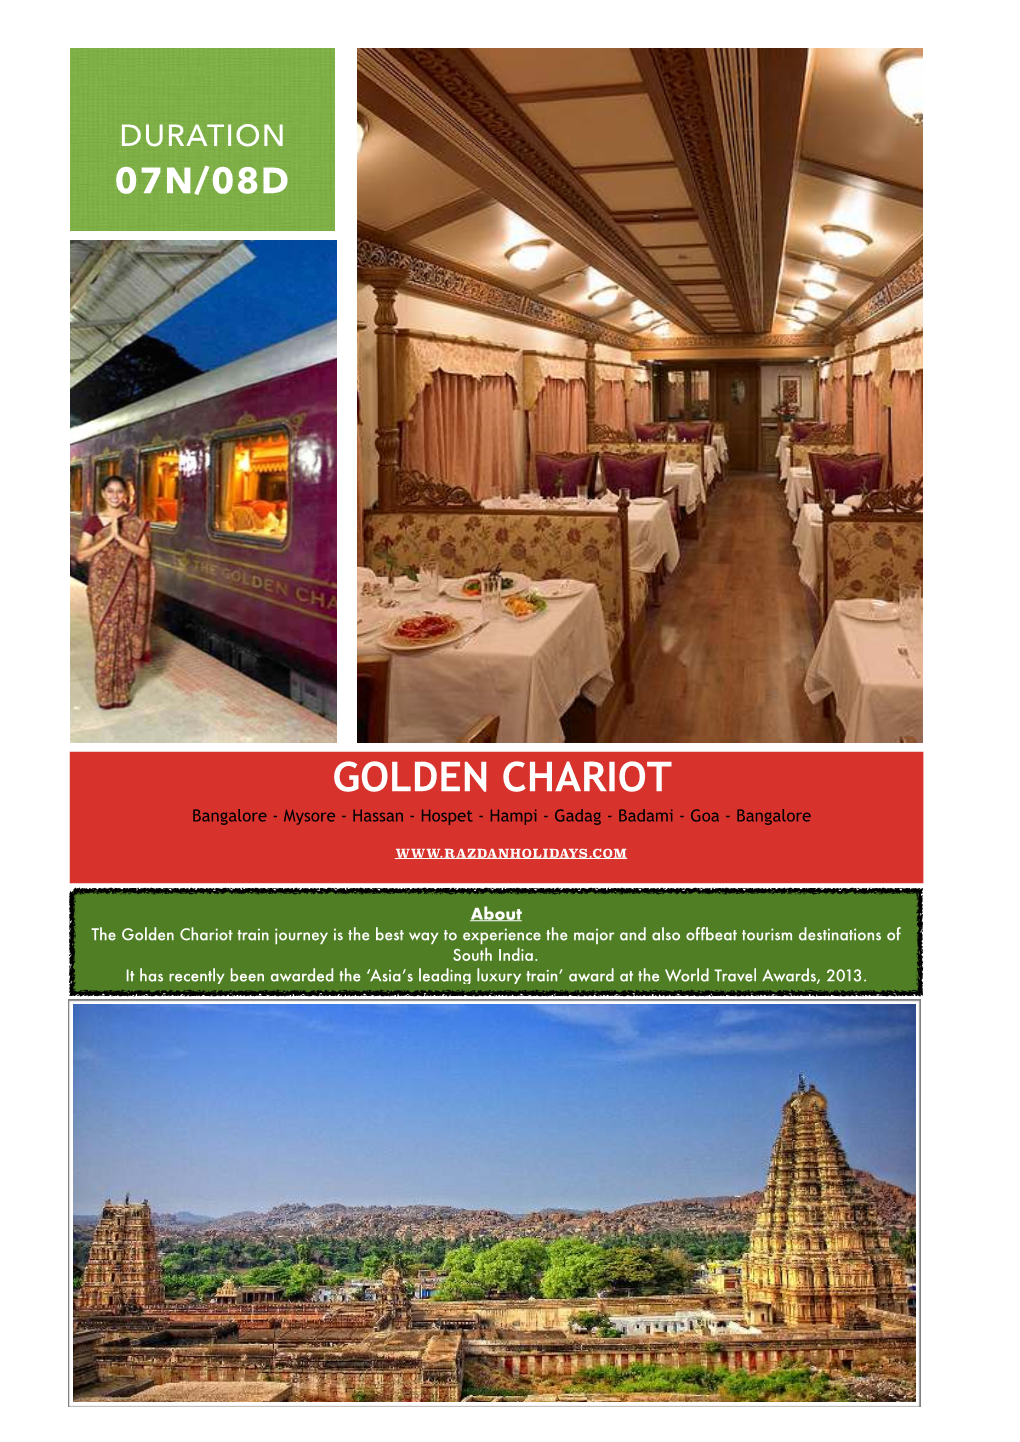 GOLDEN CHARIOT Bangalore - Mysore - Hassan - Hospet - Hampi - Gadag - Badami - Goa - Bangalore